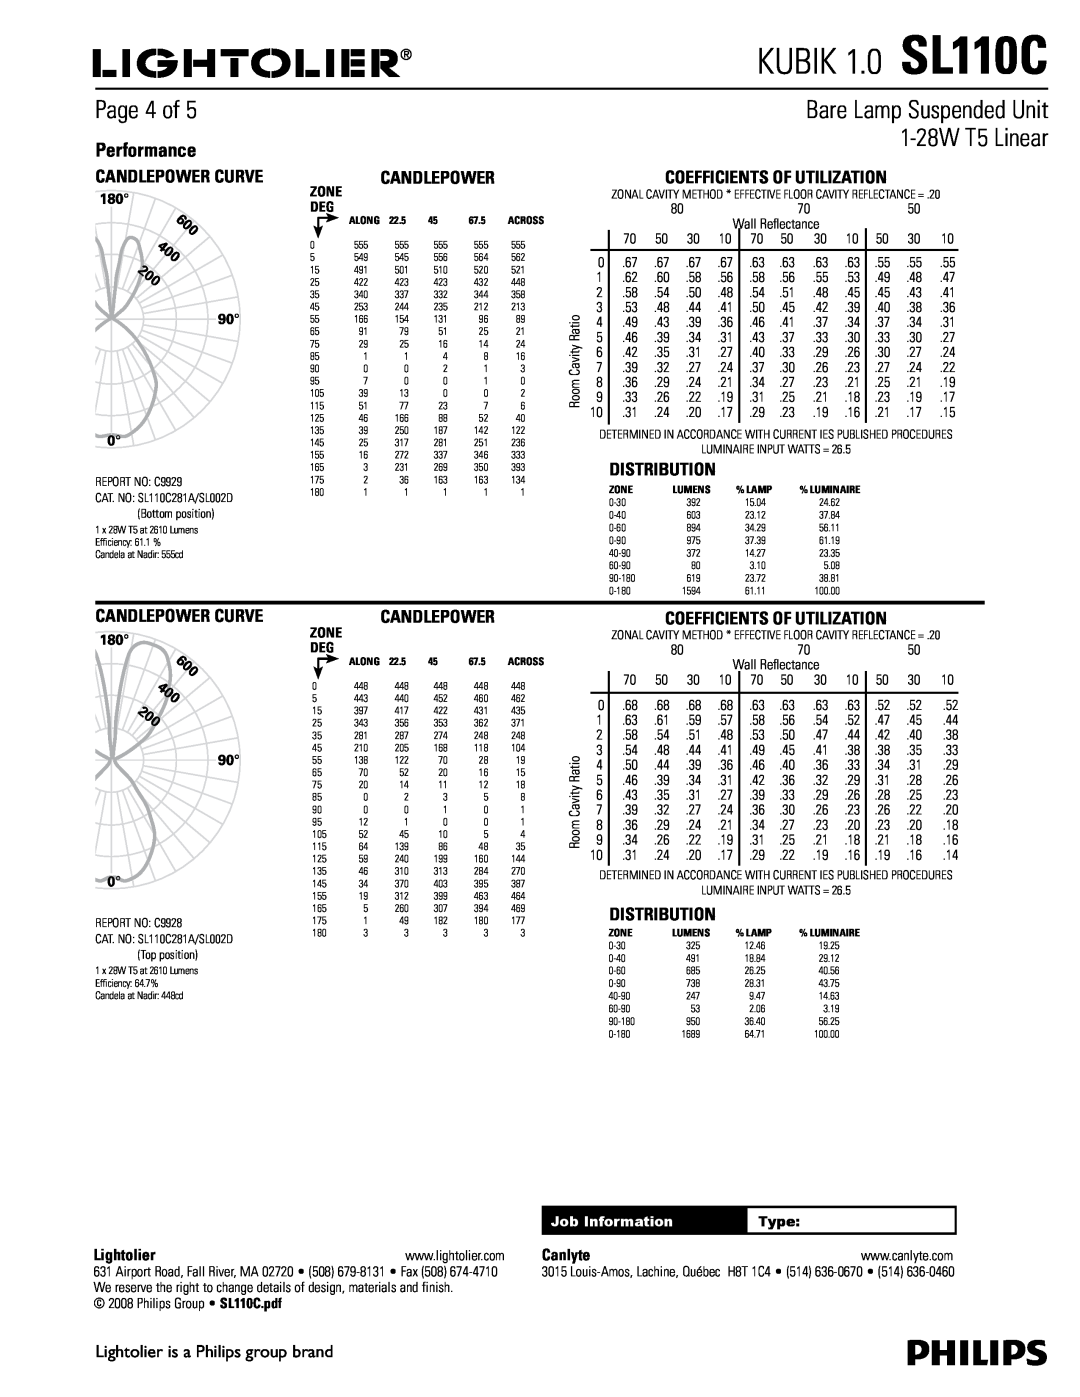 Lightolier Page 4 of, Performance, 600, Candlepower Curve, Coefficients Of Utilization, KUBIK 1.0 SL110C, Distribution 